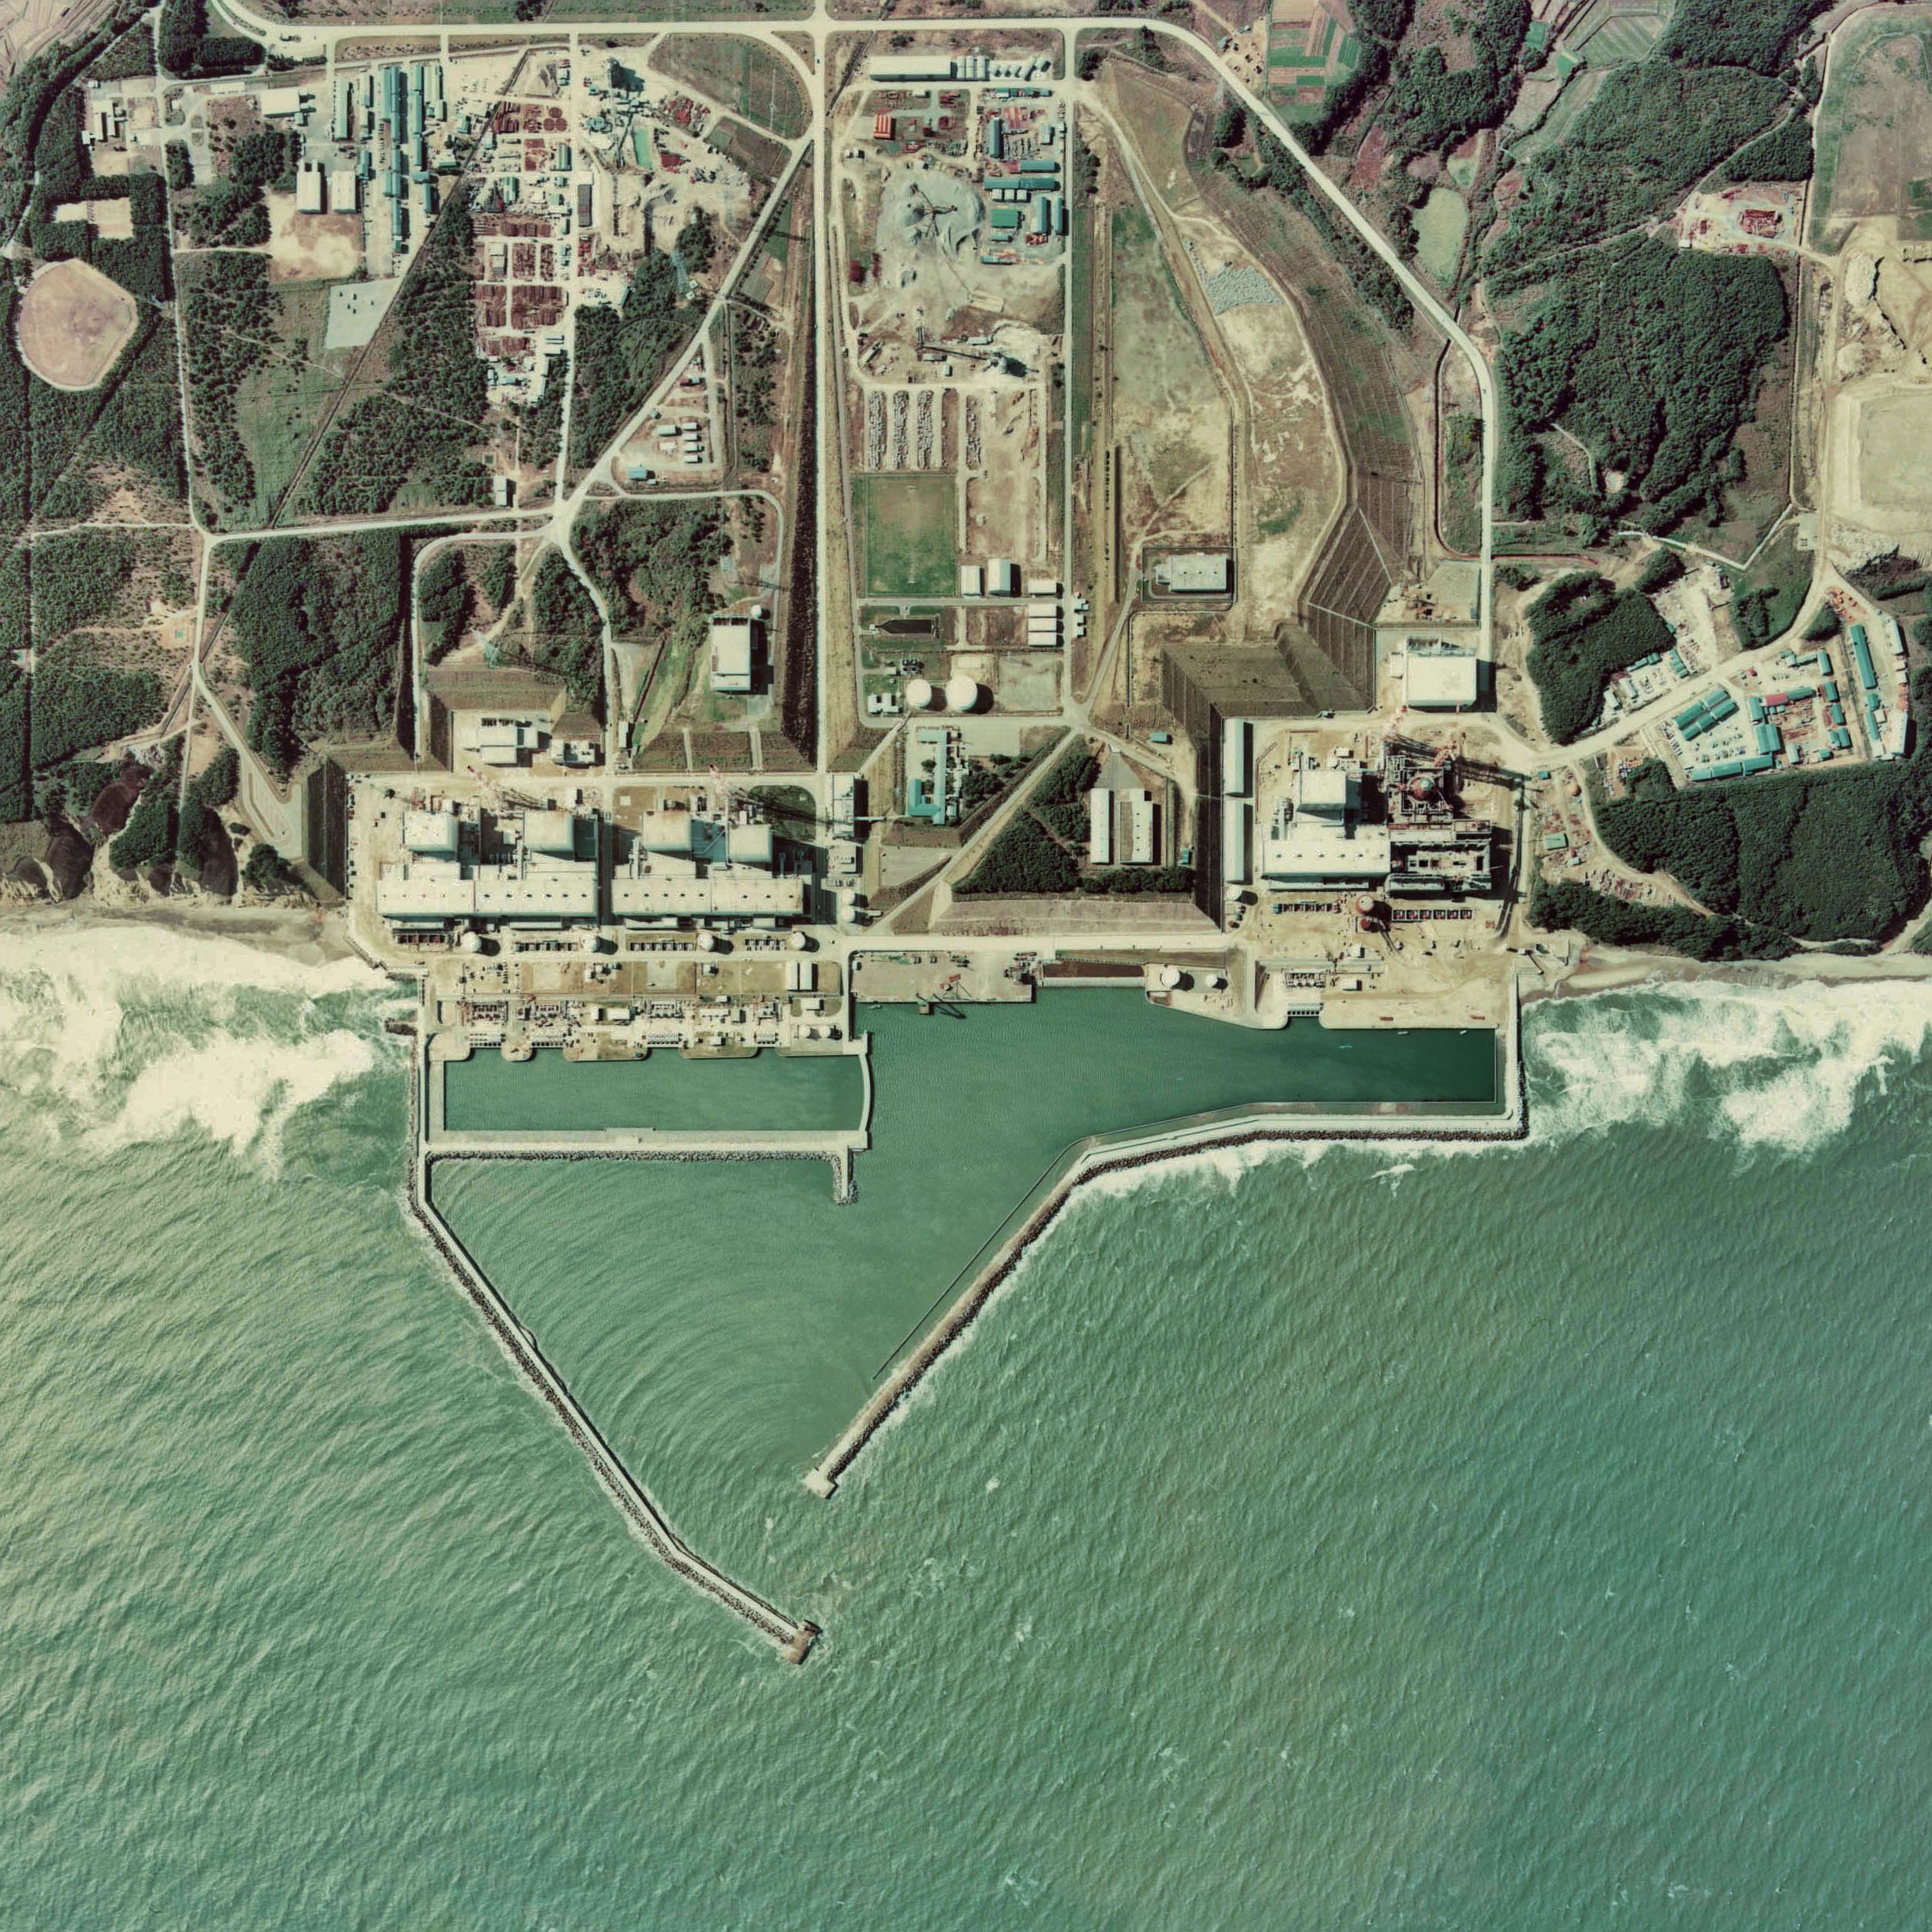 Fukushima I nuclear facility seen from the air